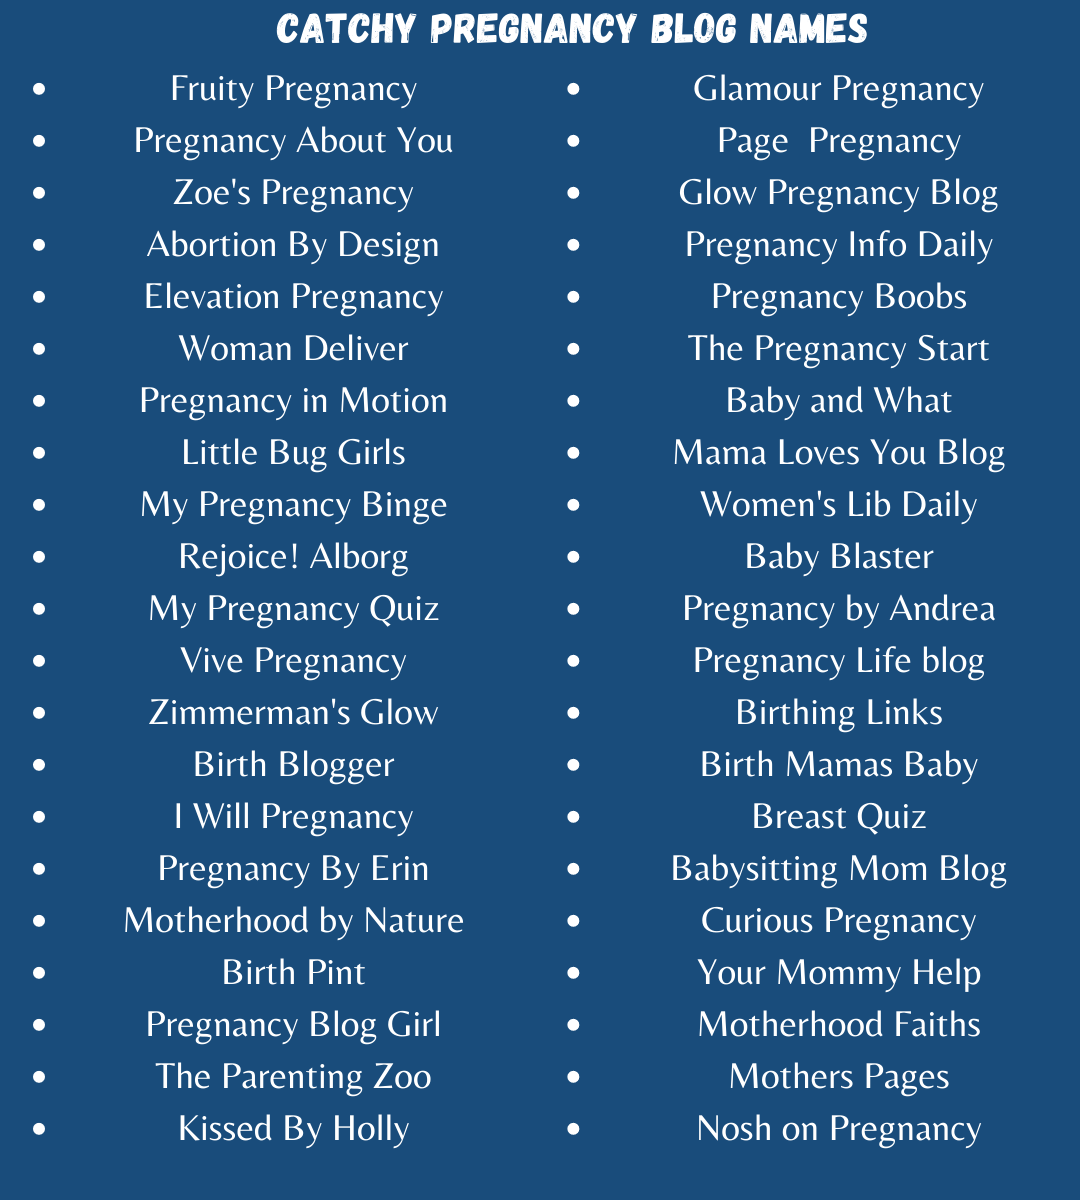 Pregnancy Blog Names